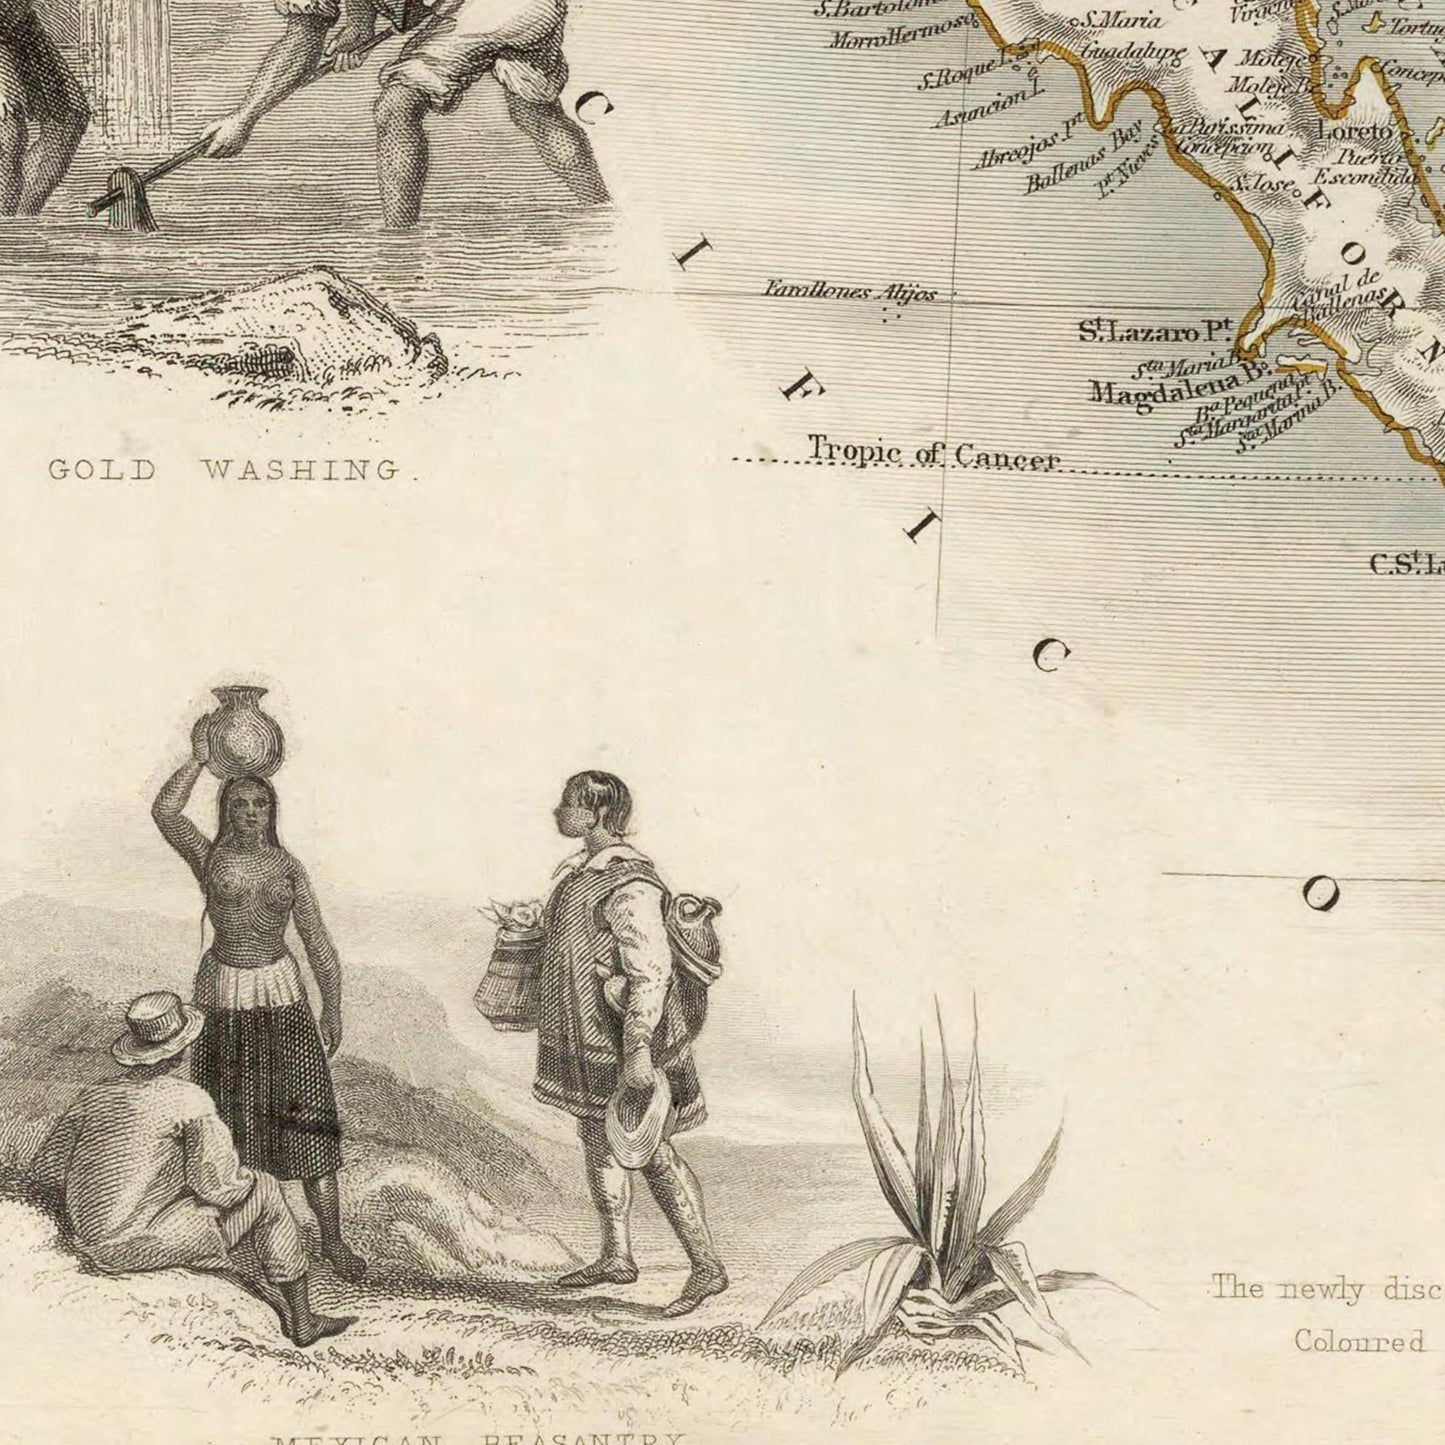 Historische Landkarte Mexiko um 1850